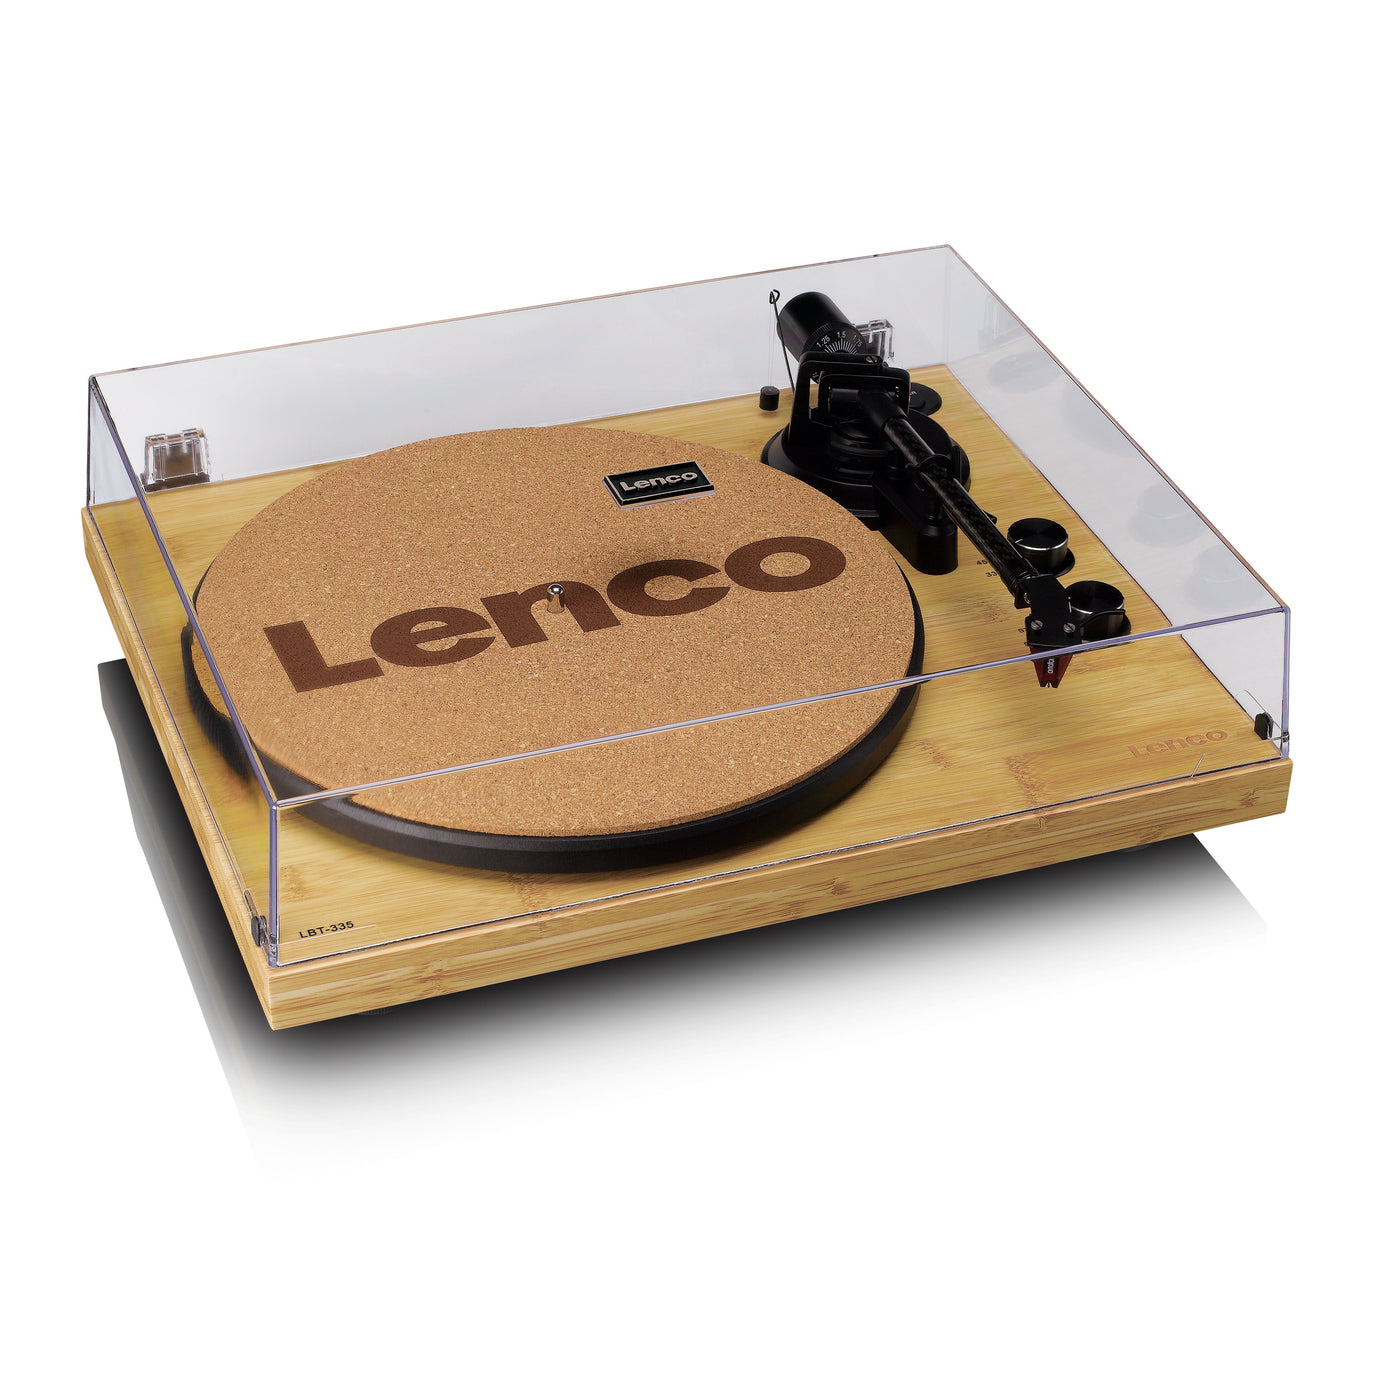 LENCO LBT-335BA - Platenspeler met Bluetooth®, uit bamboe vervaardigde behuizing en Ortofon 2M Red cartridge